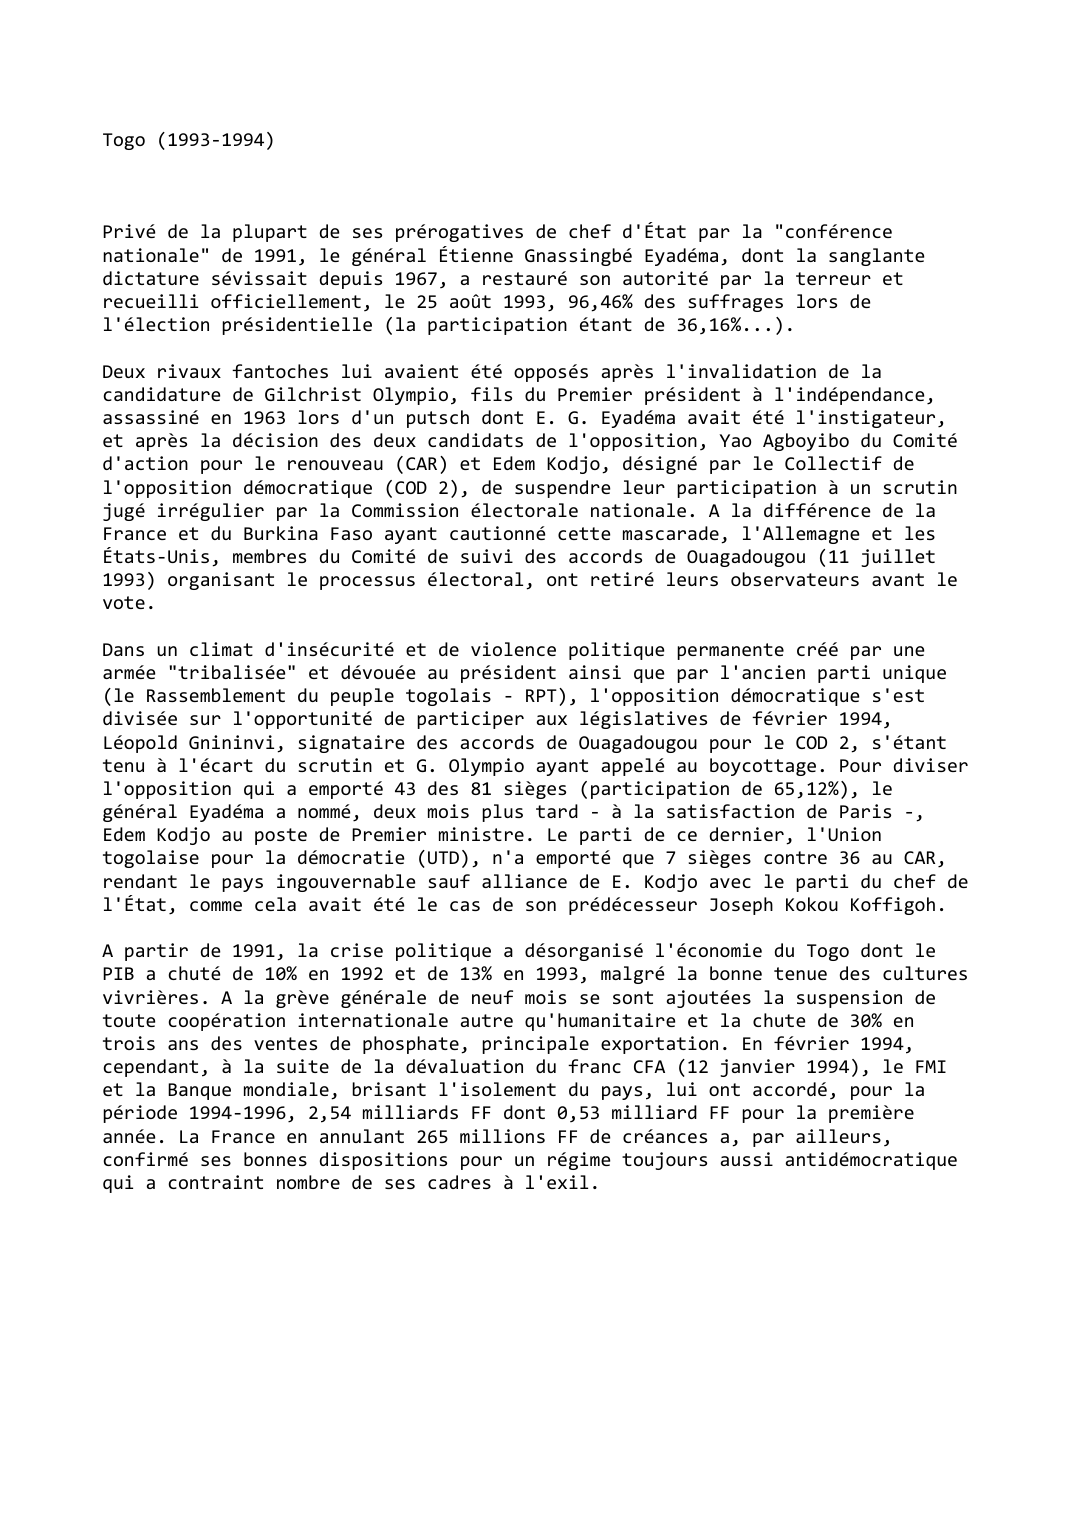 Prévisualisation du document Togo (1993-1994)